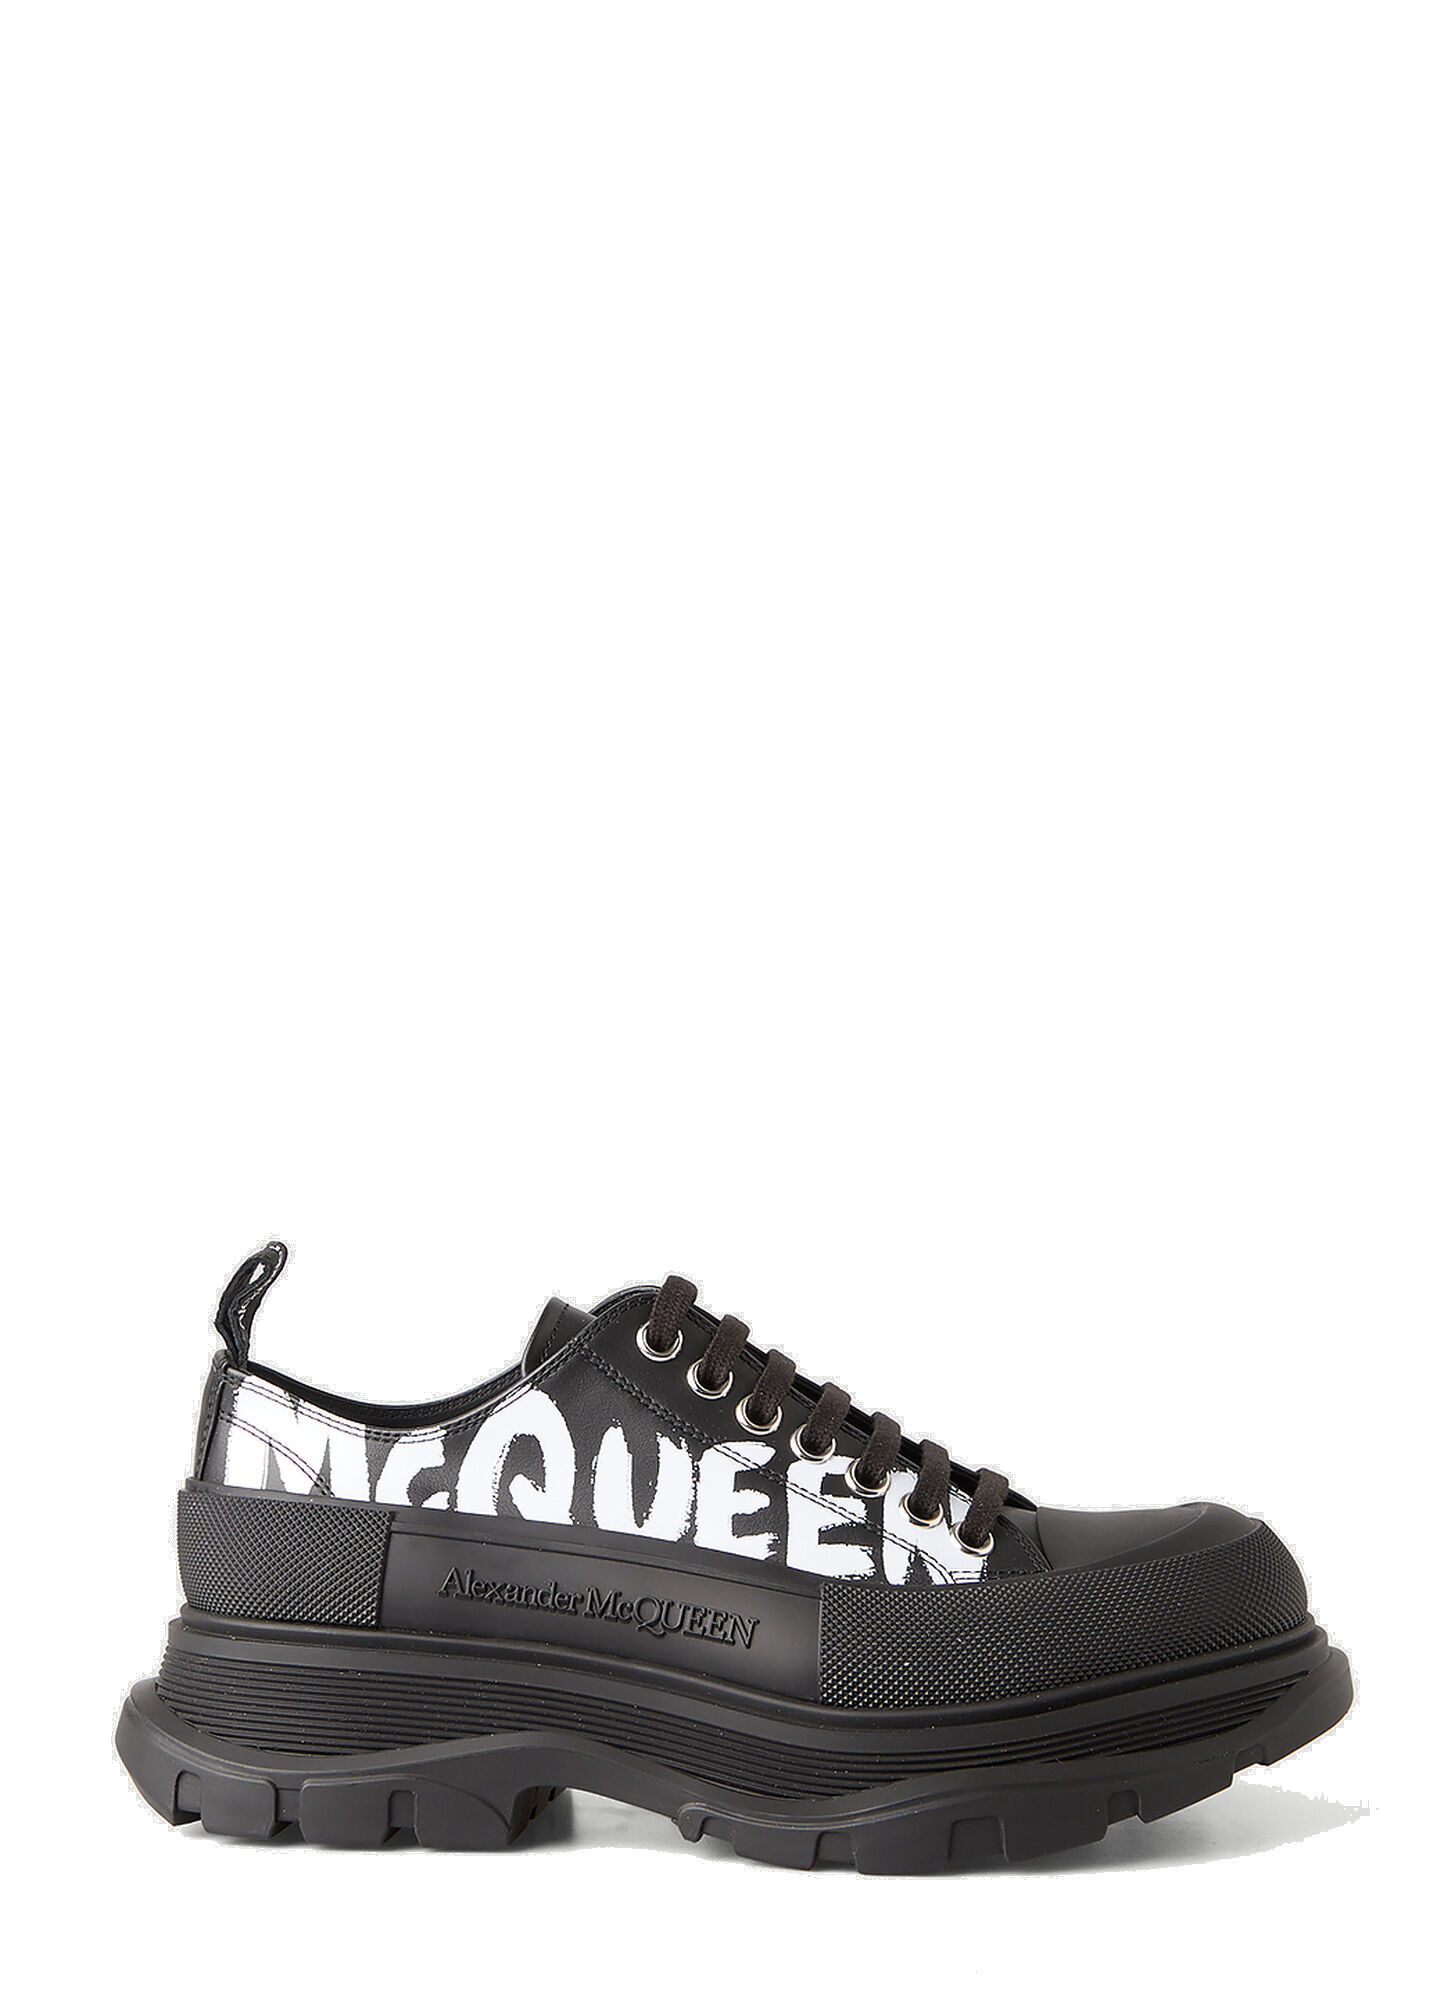 Tread Slick Graffiti Sneakers in Black Alexander McQueen